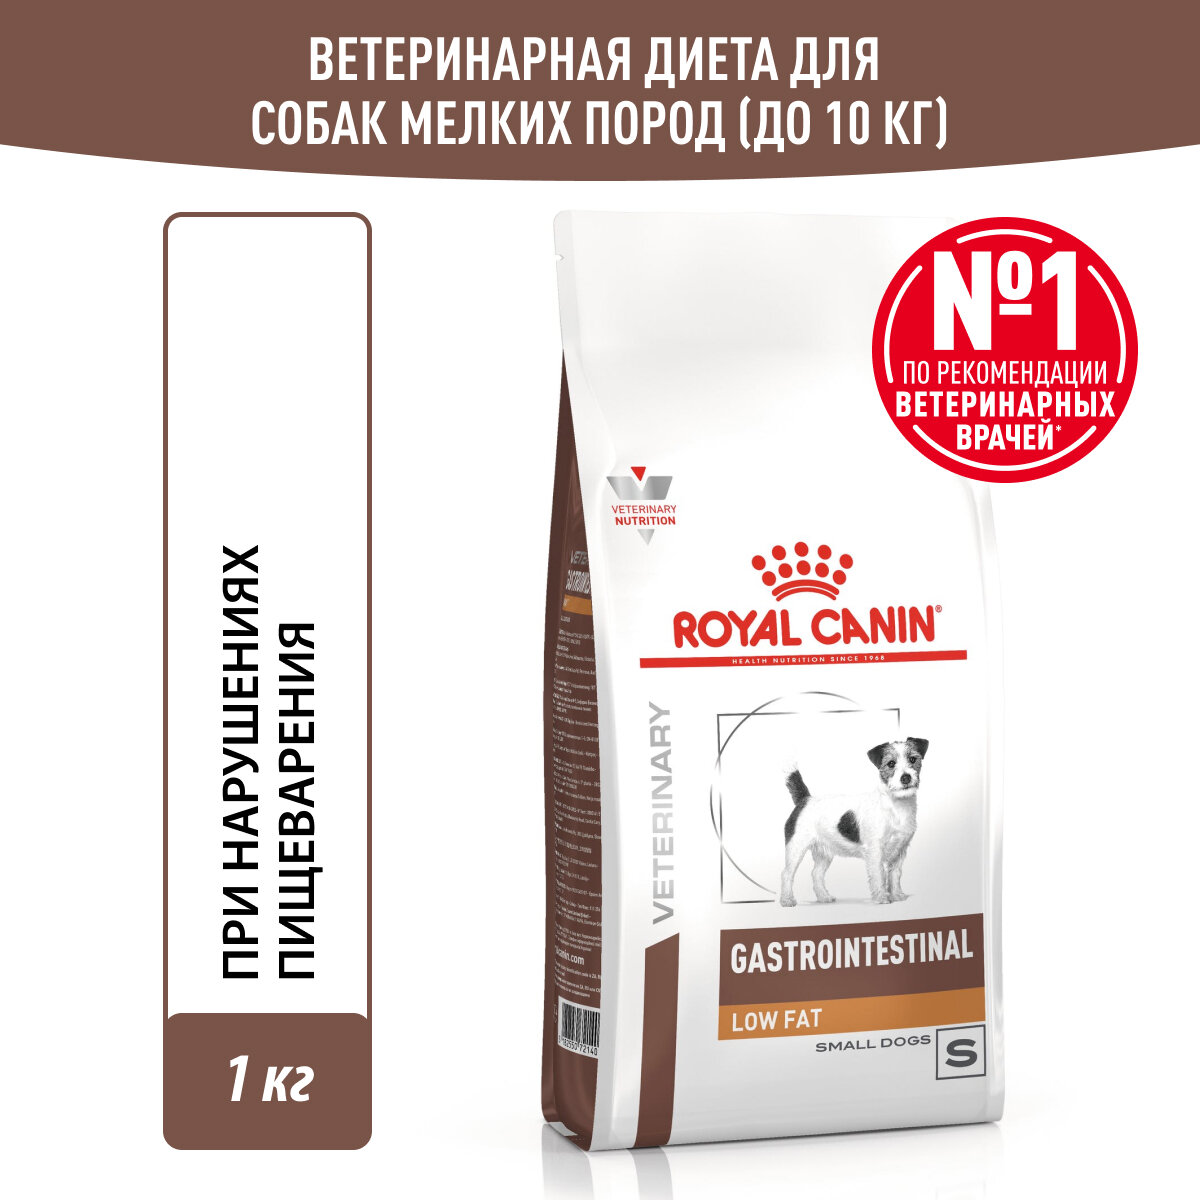 Royal Canin Gastrointestinal Low Fat Small Dog сухой корм для собак мелких пород 1 кг